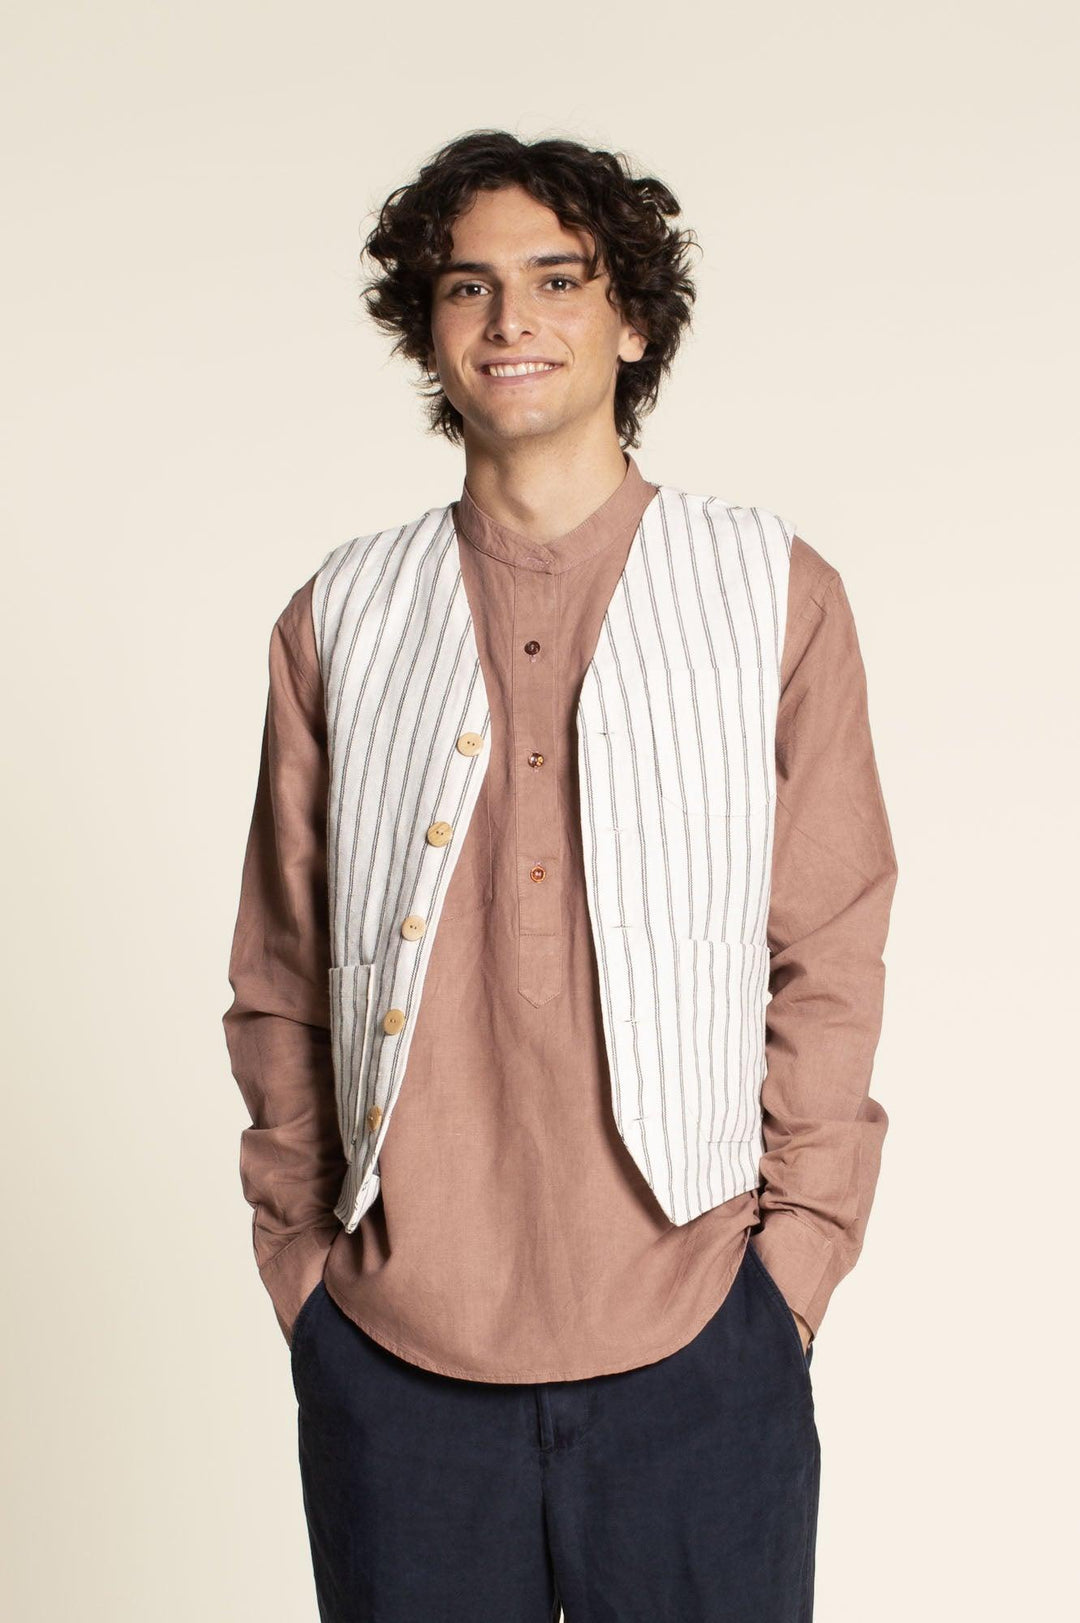 Men's vest sewing pattern  Wardrobe By Me - We love sewing!